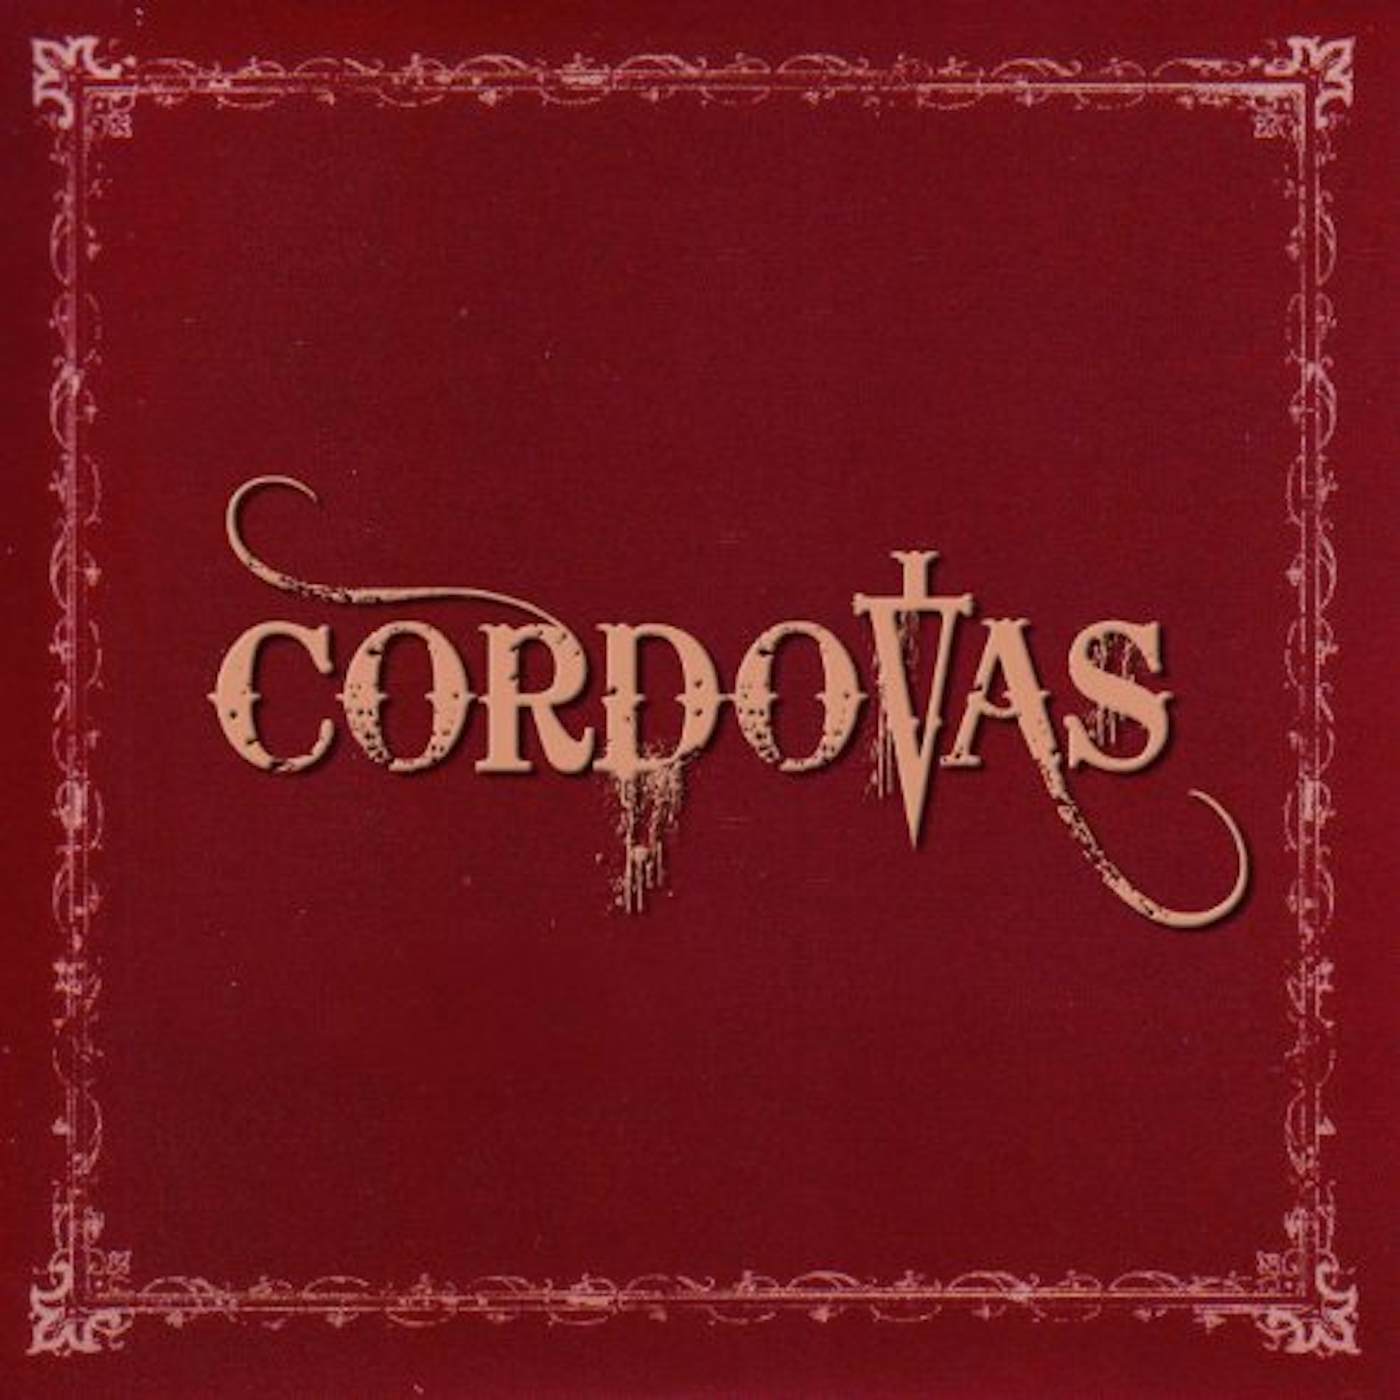 Cordovas Vinyl Record